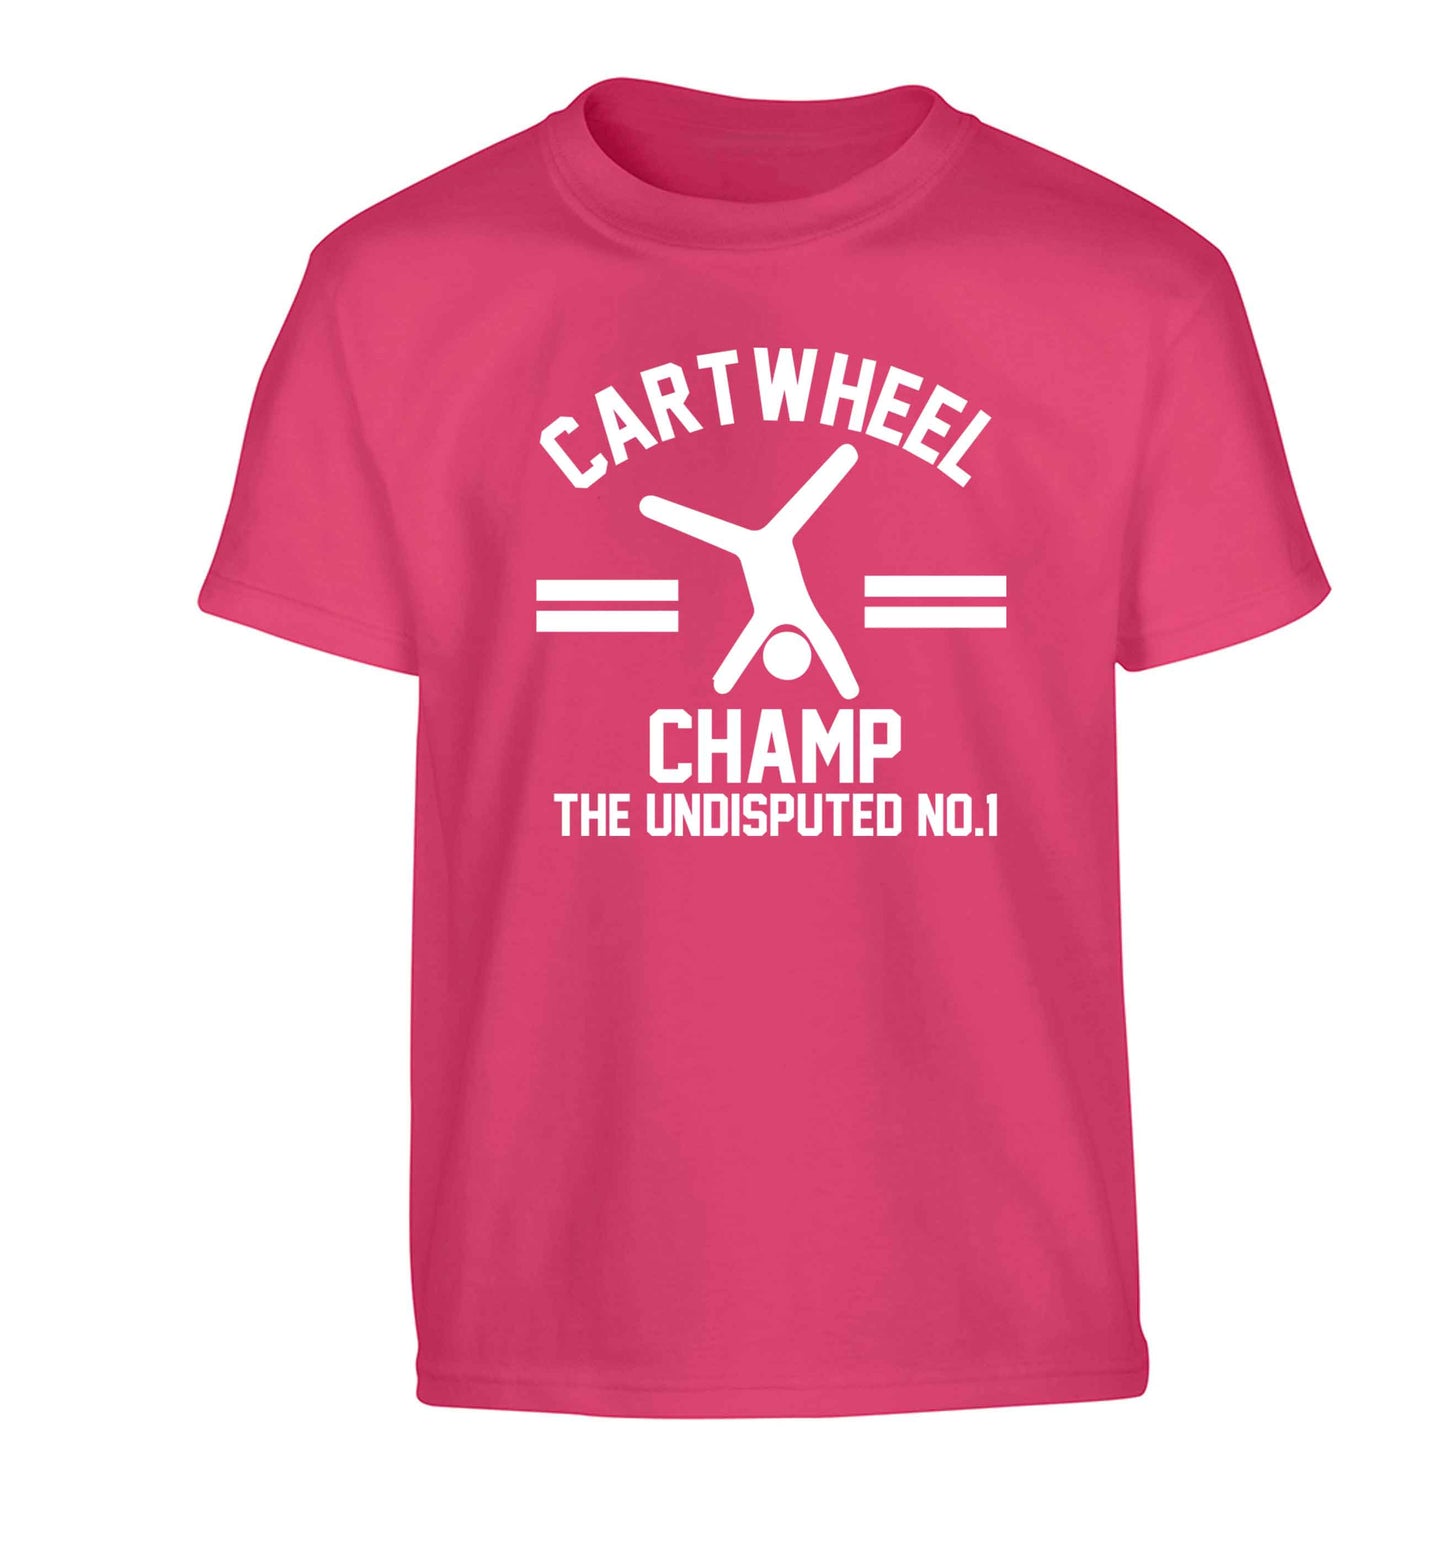 Undisputed cartwheel championship no.1  Children's pink Tshirt 12-13 Years